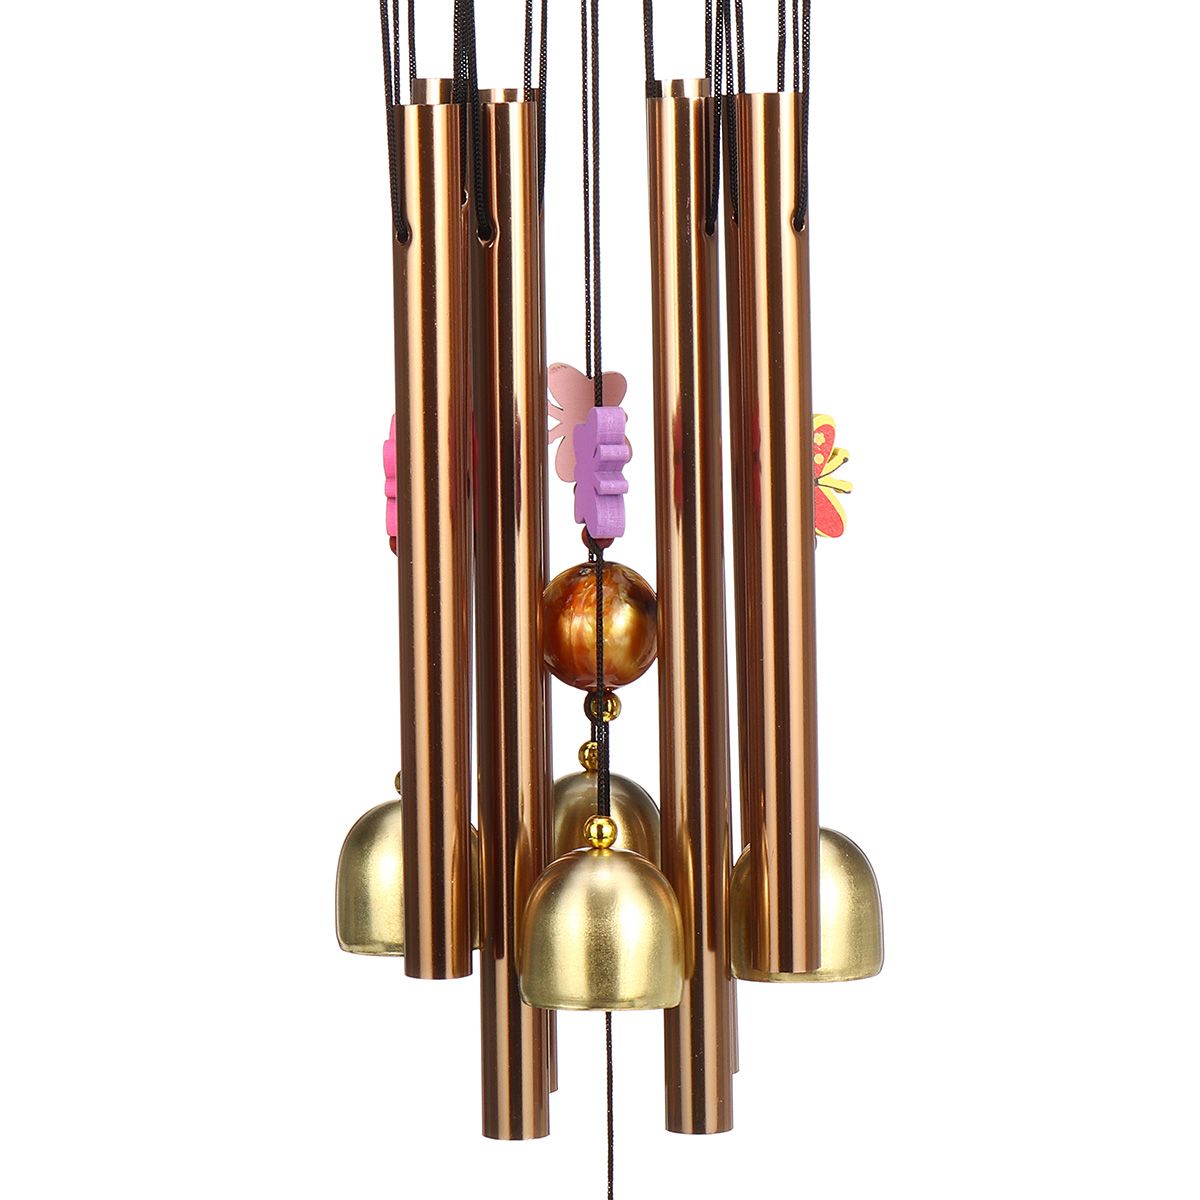 Metal-Eight-Tube-4-Bell-Wooden-Wind-Chime-Wooden-Home-Garden-Handicraft-Ornaments-1721043